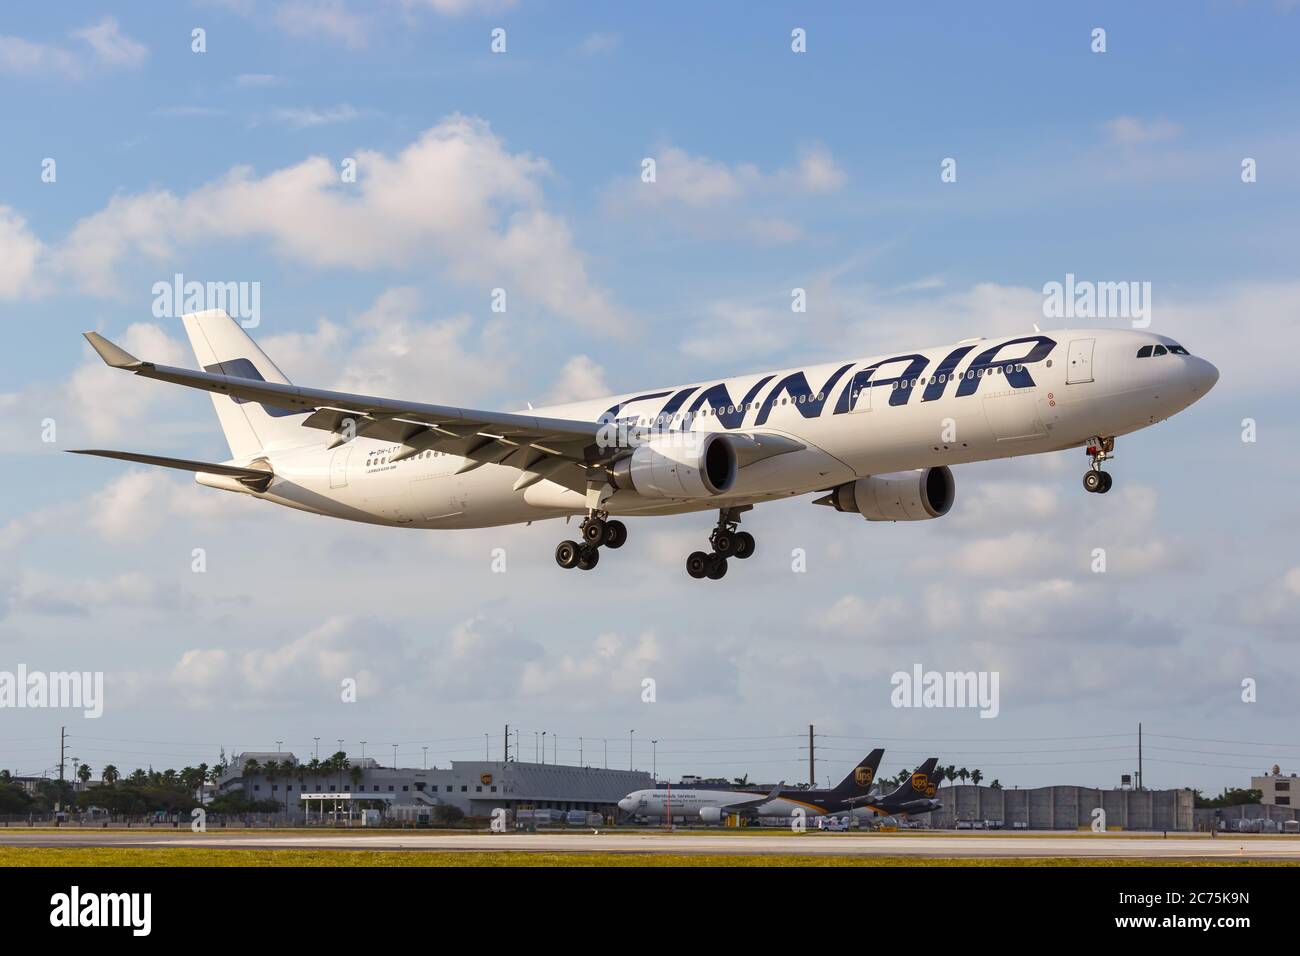 Miami, Florida - April 6, 2019: Finnair Airbus A330-300 airplane at Miami airport (MIA) in Florida. Airbus is a European aircraft manufacturer based i Stock Photo